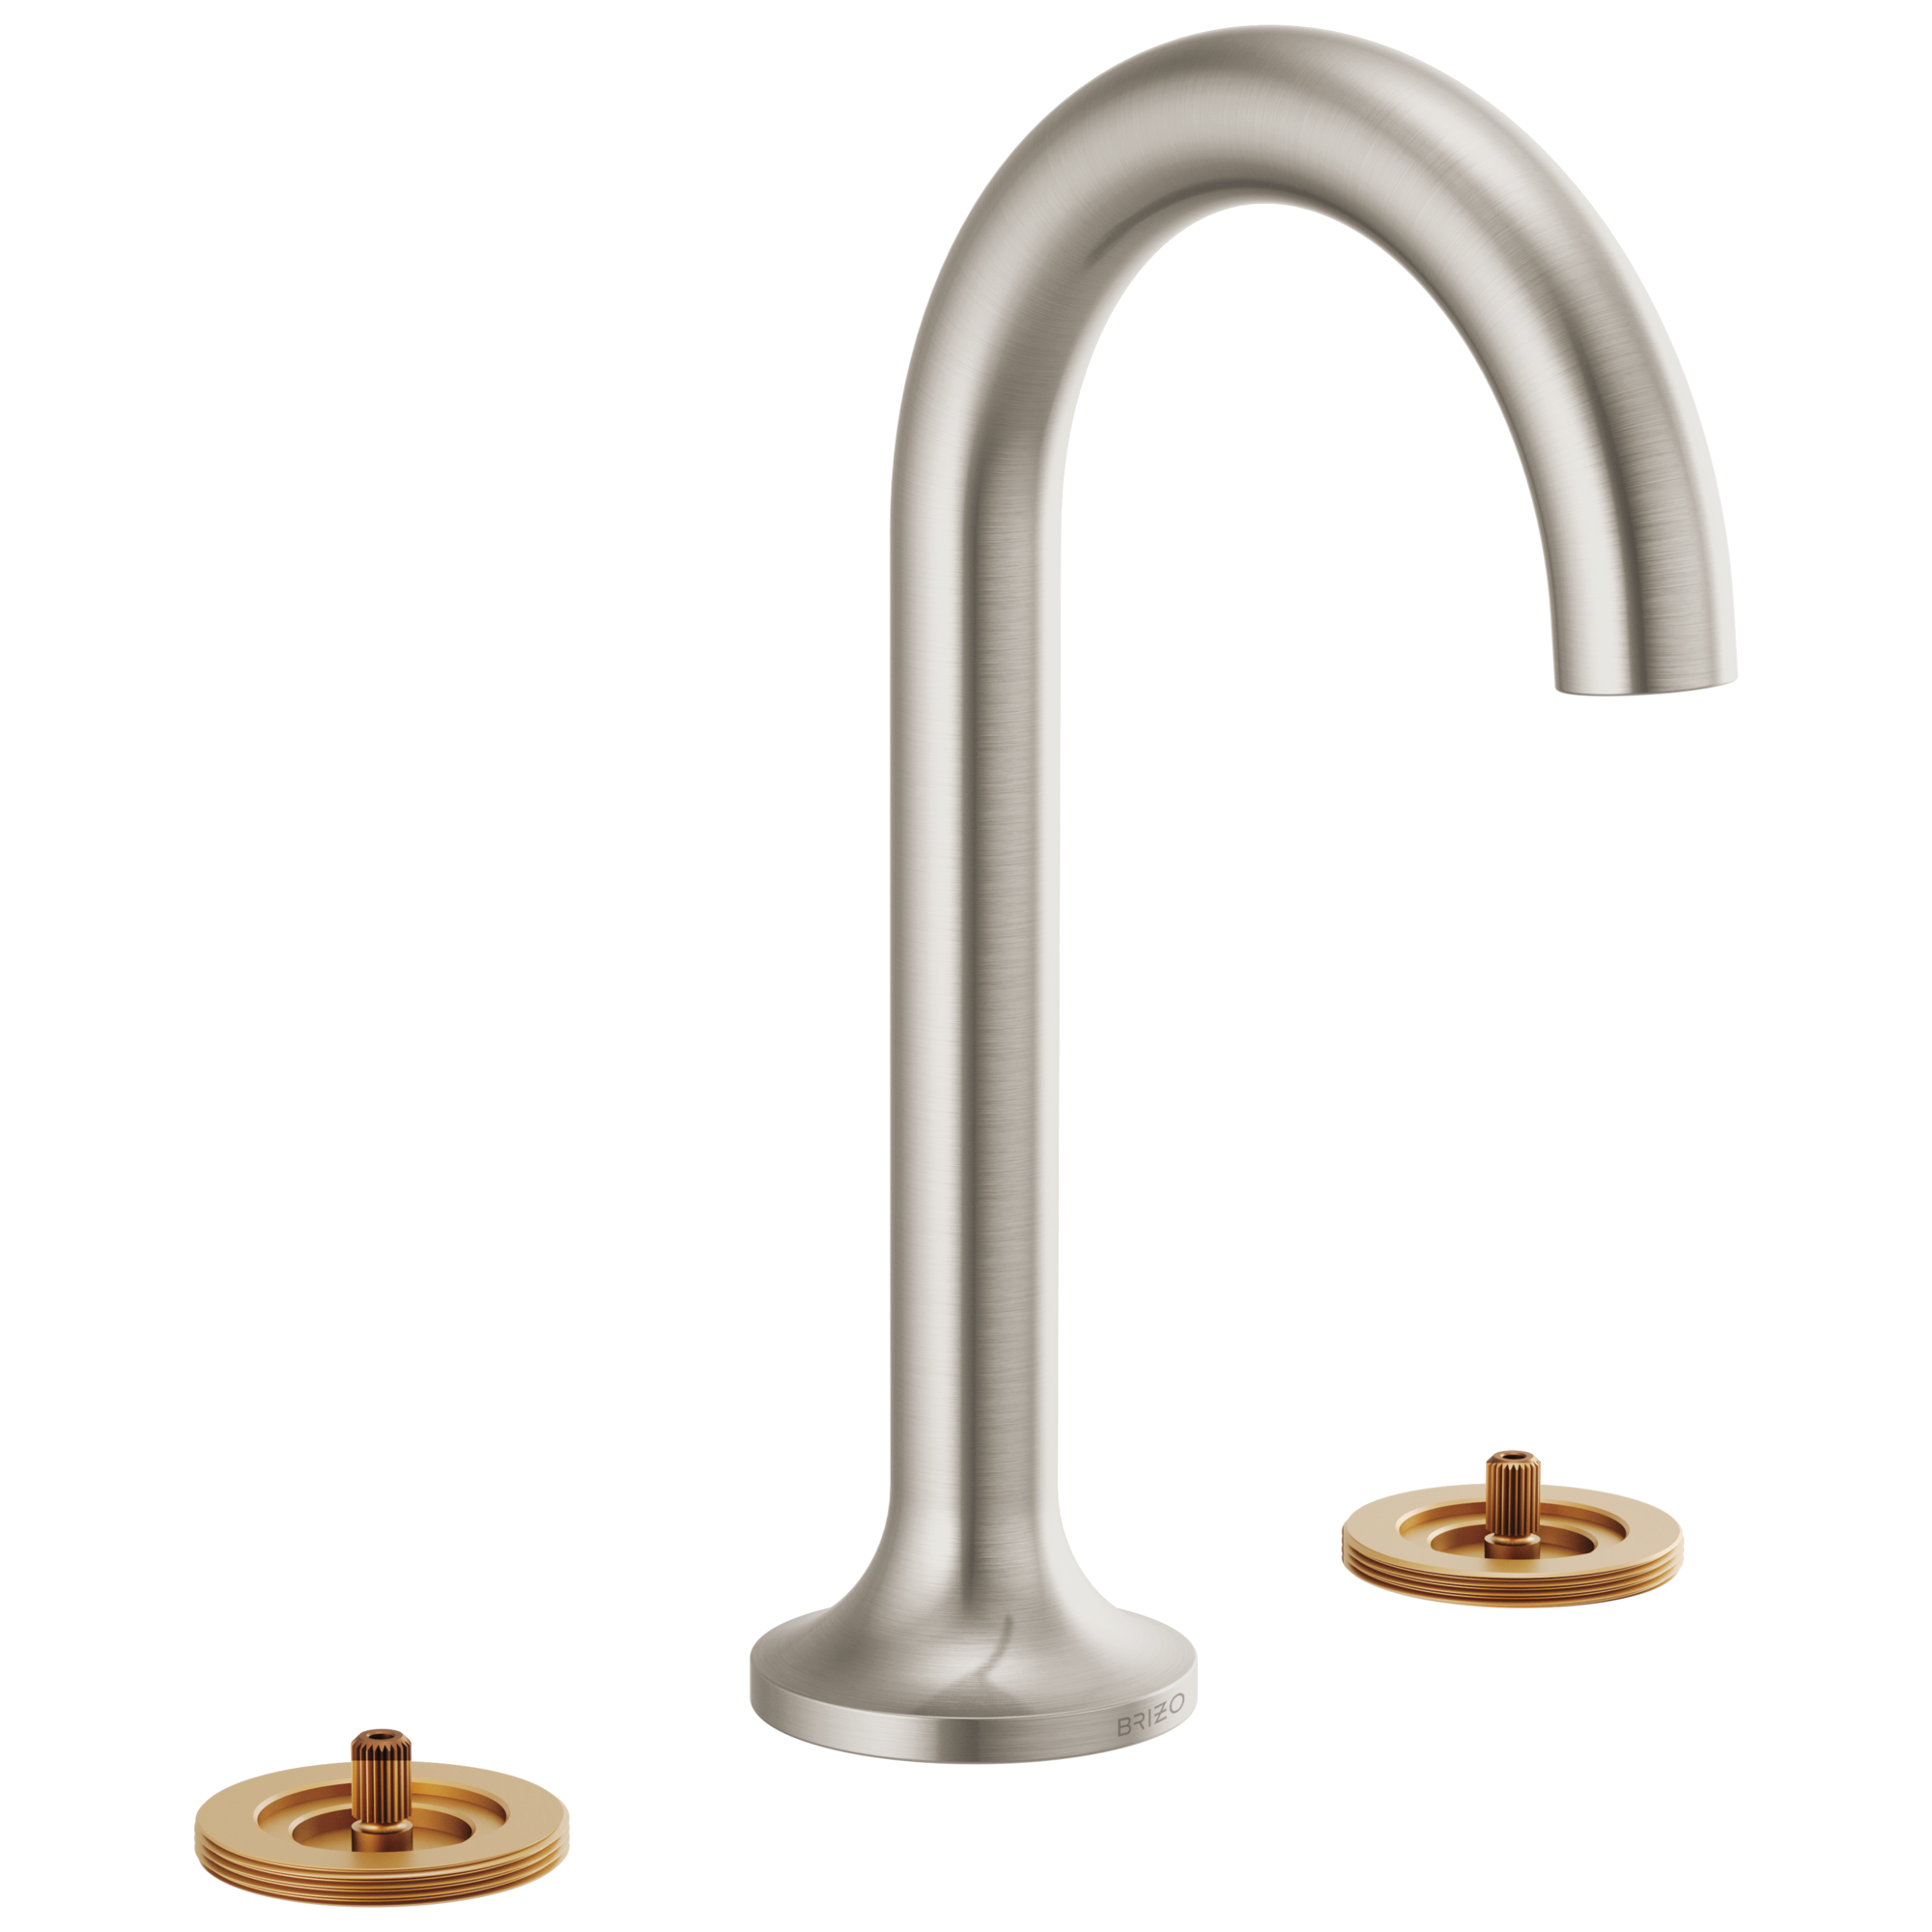 Brizo Odin Widespread Lavatory Faucet - Less Handles